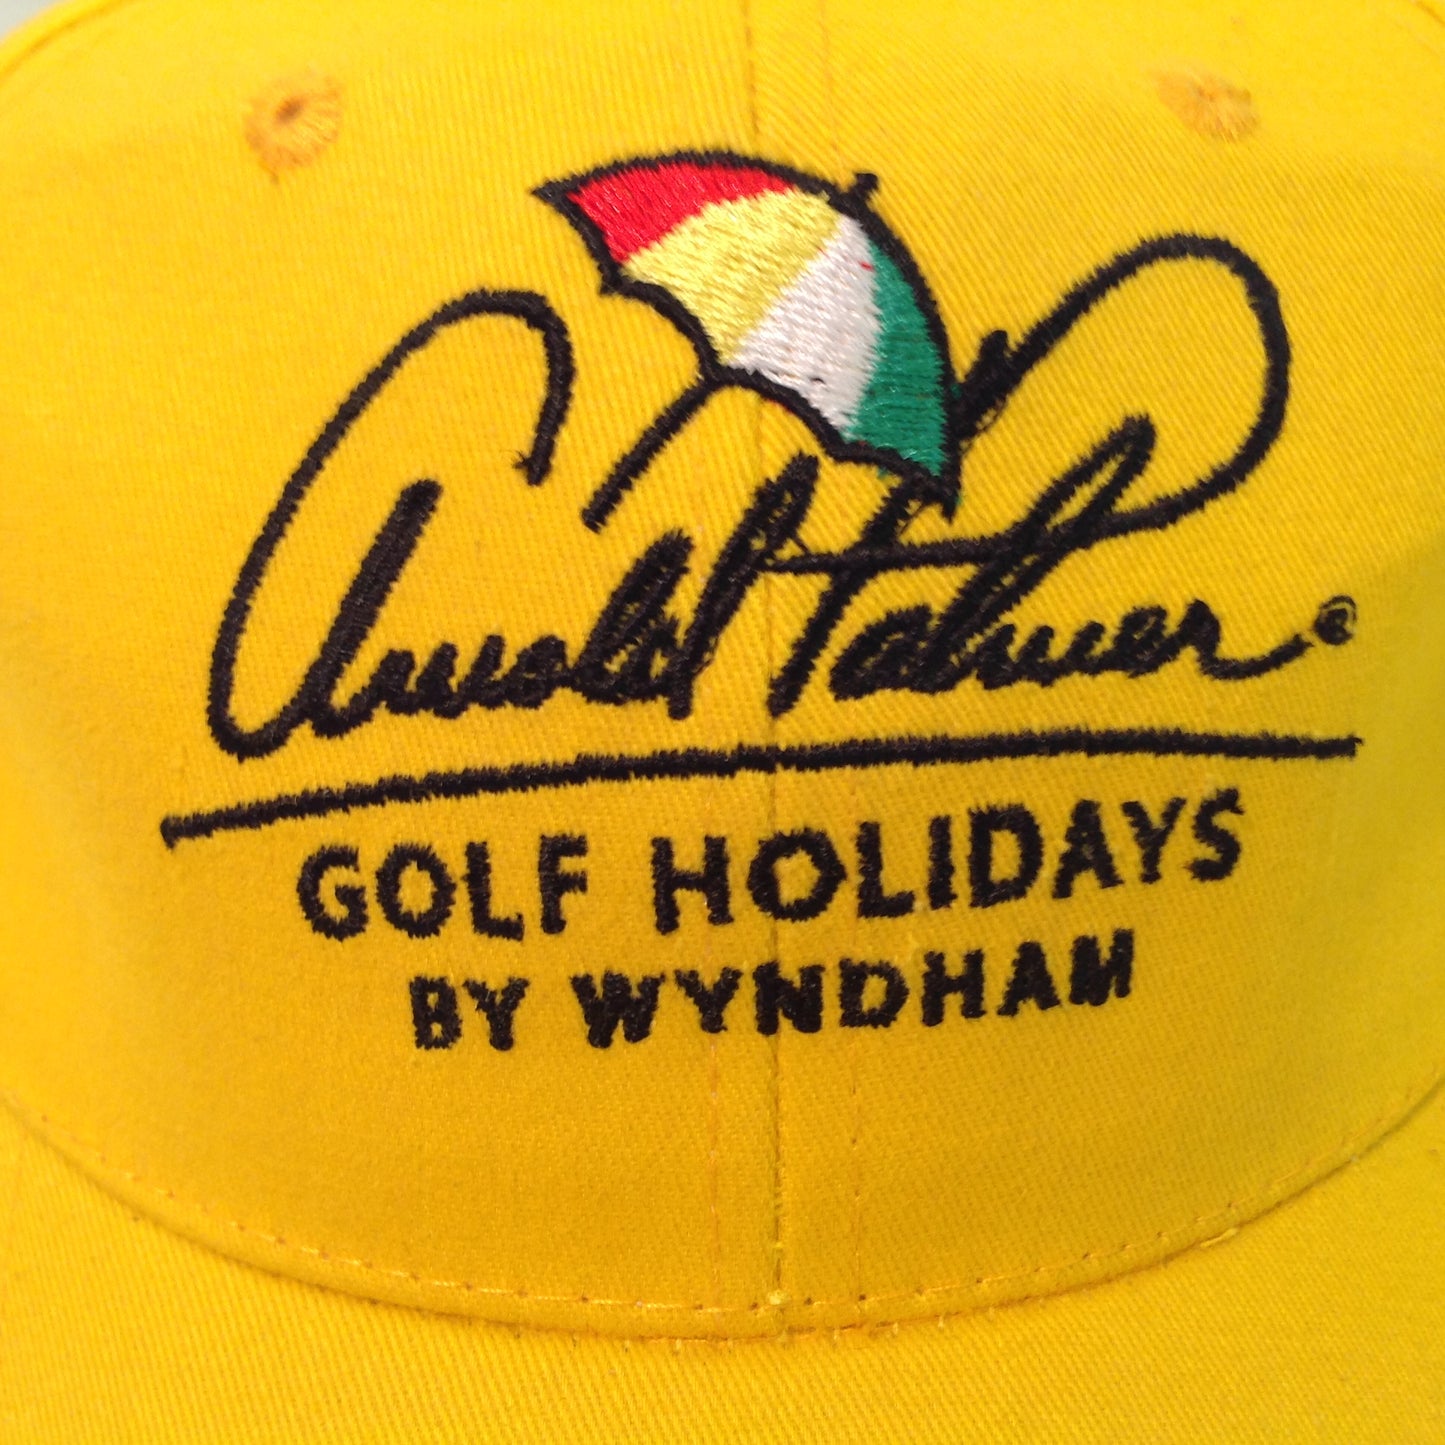 Vintage Souvenir Arnold Palmer Golf Holidays by Wyndham Foursome Golf Tournament Greensboro North Carolina Yellow Baseball Cap